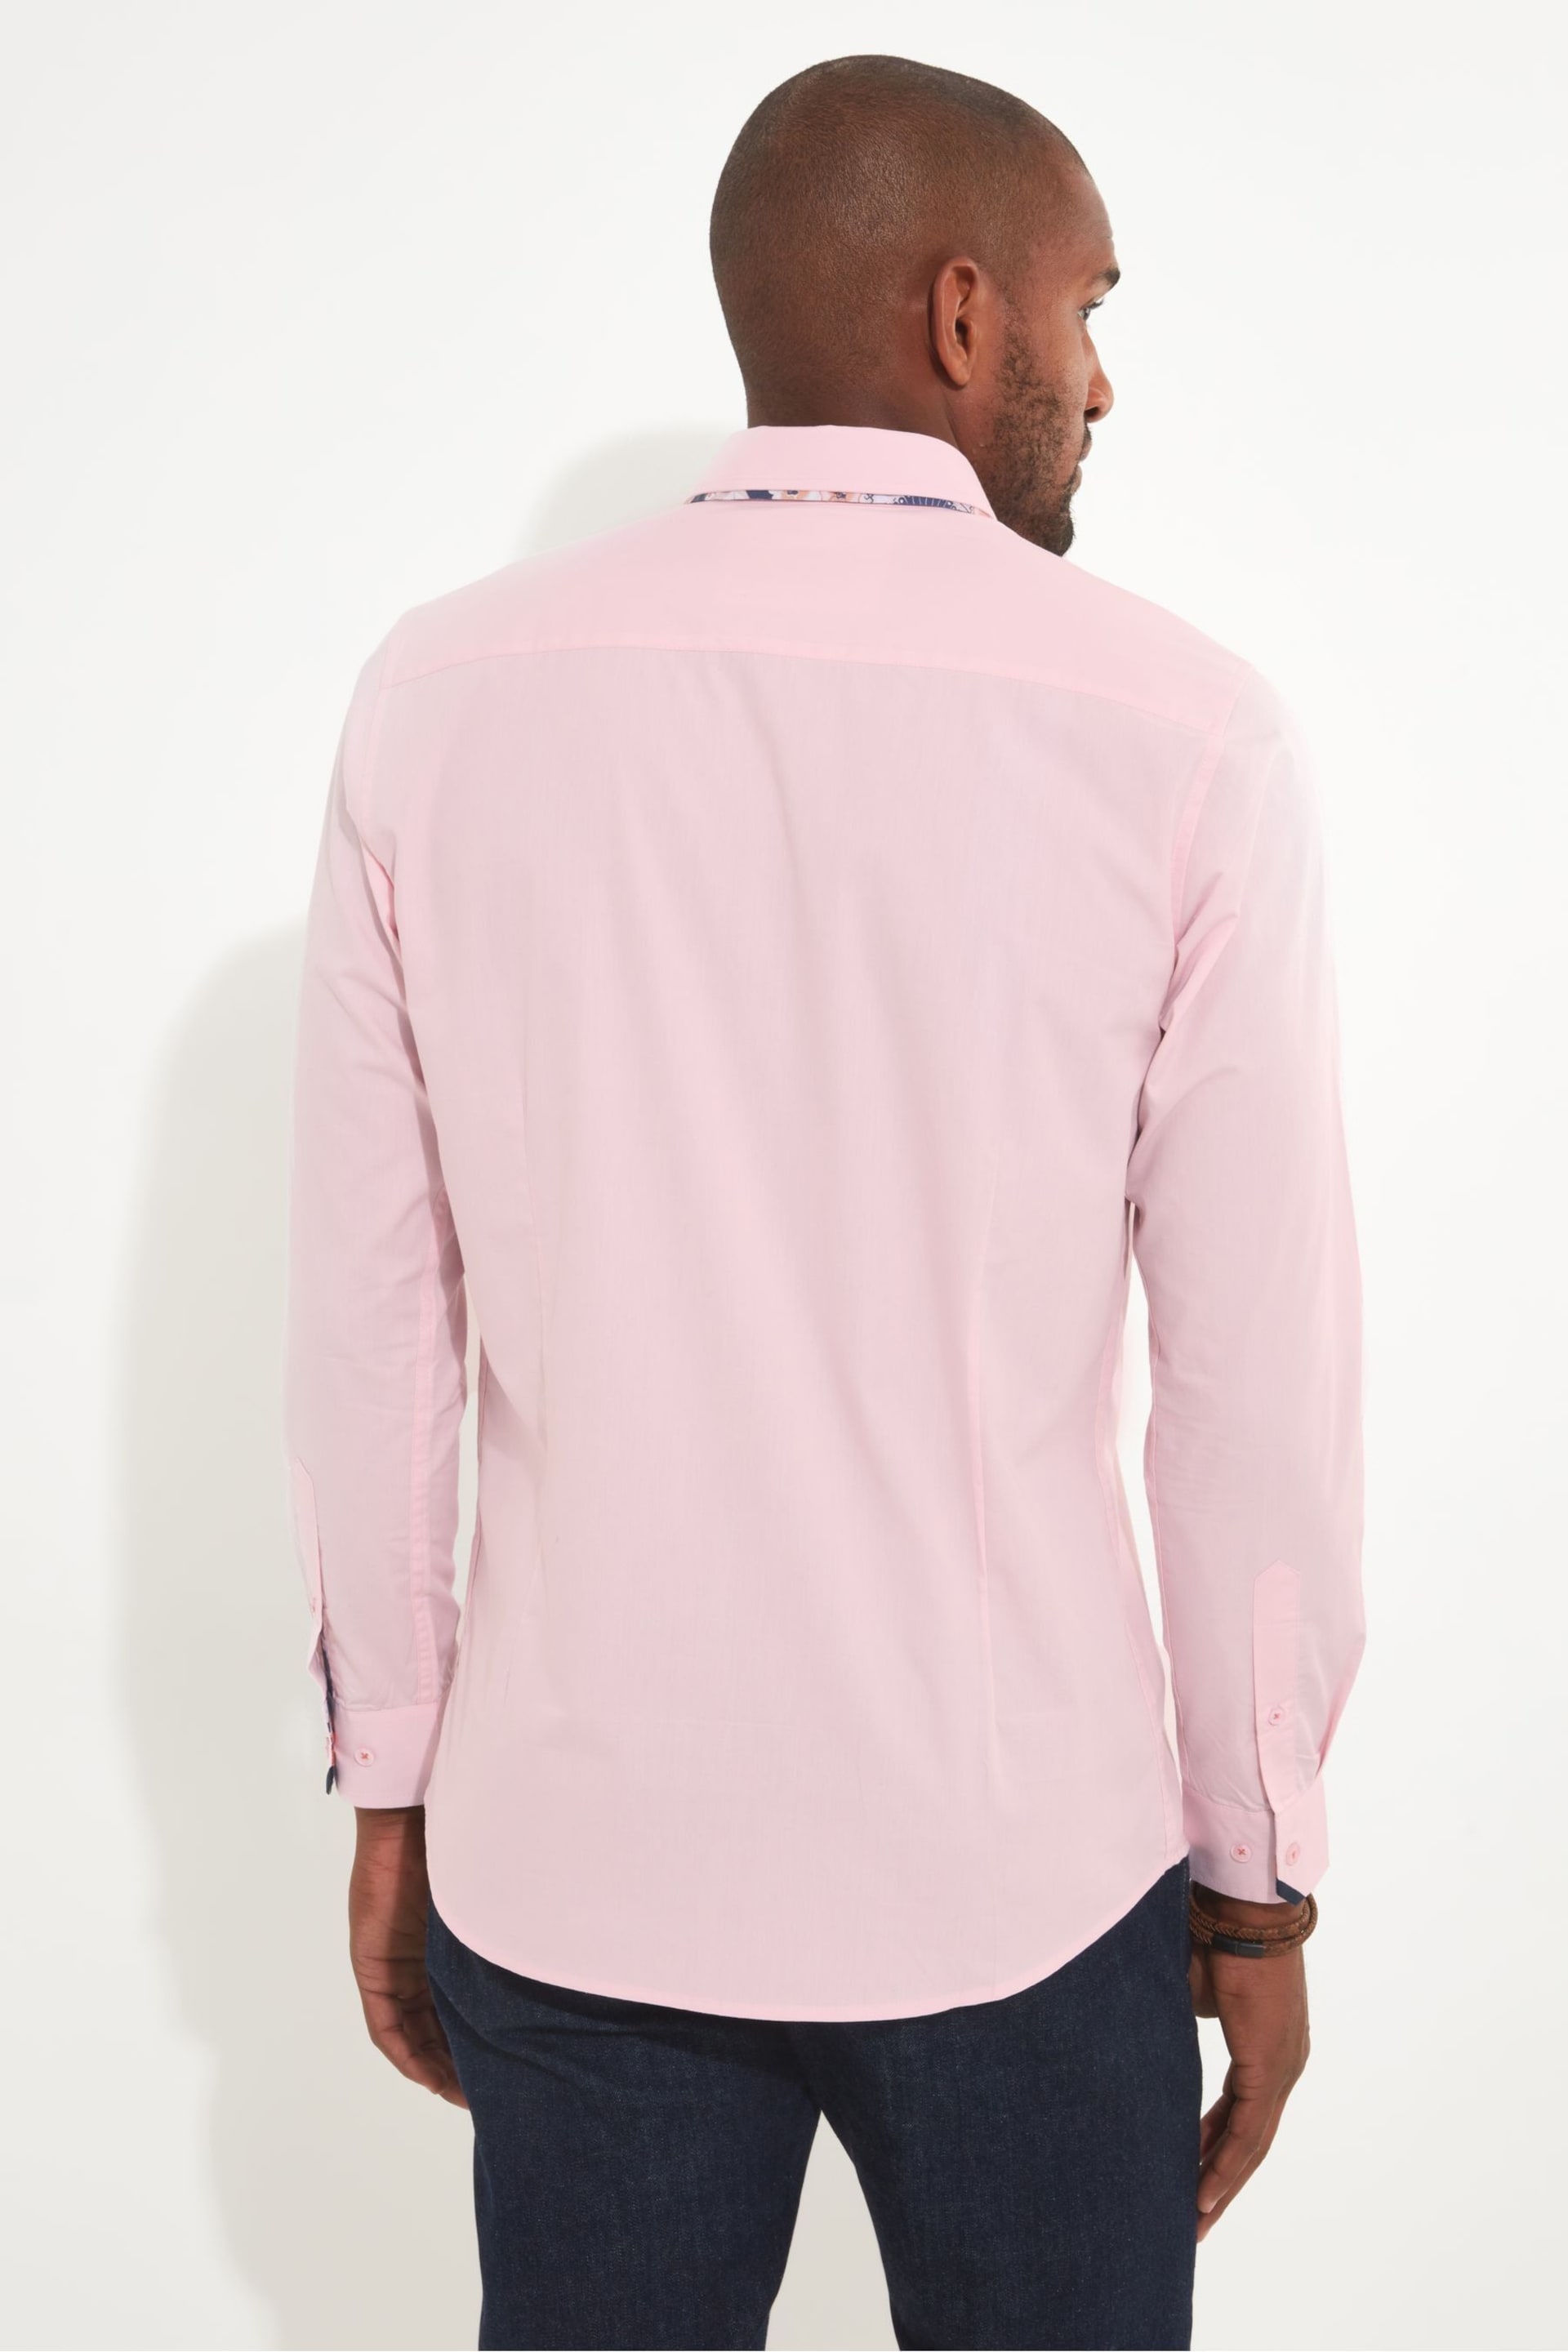 Joe Browns Pink Smart Long Sleeve Shirt - Image 2 of 5